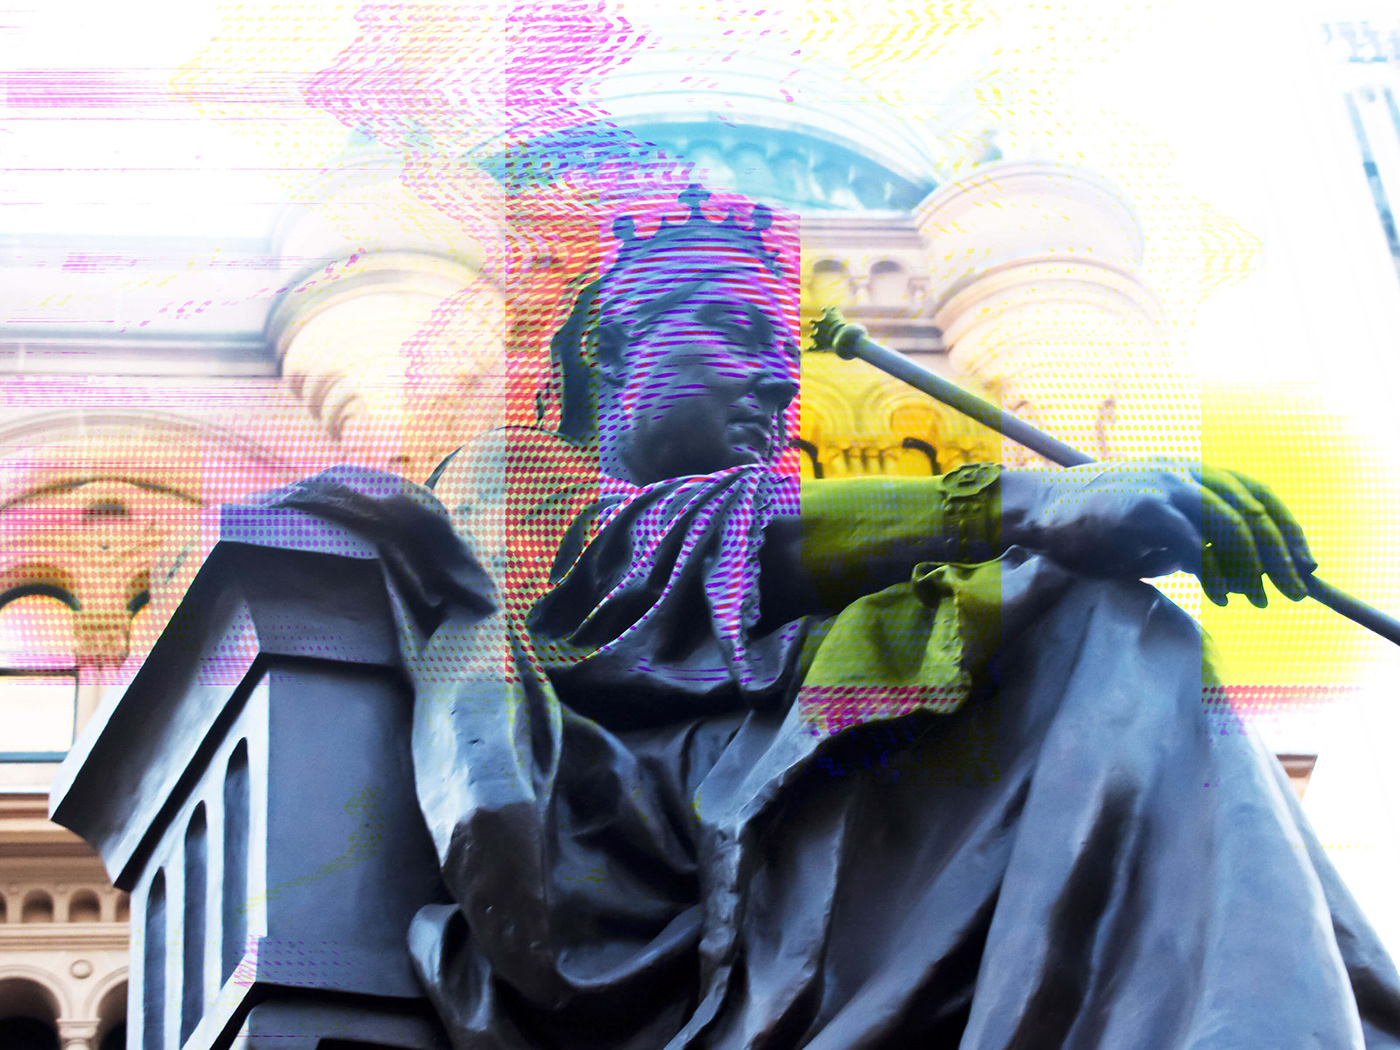 Queen Victoria statue with glitch overlay
